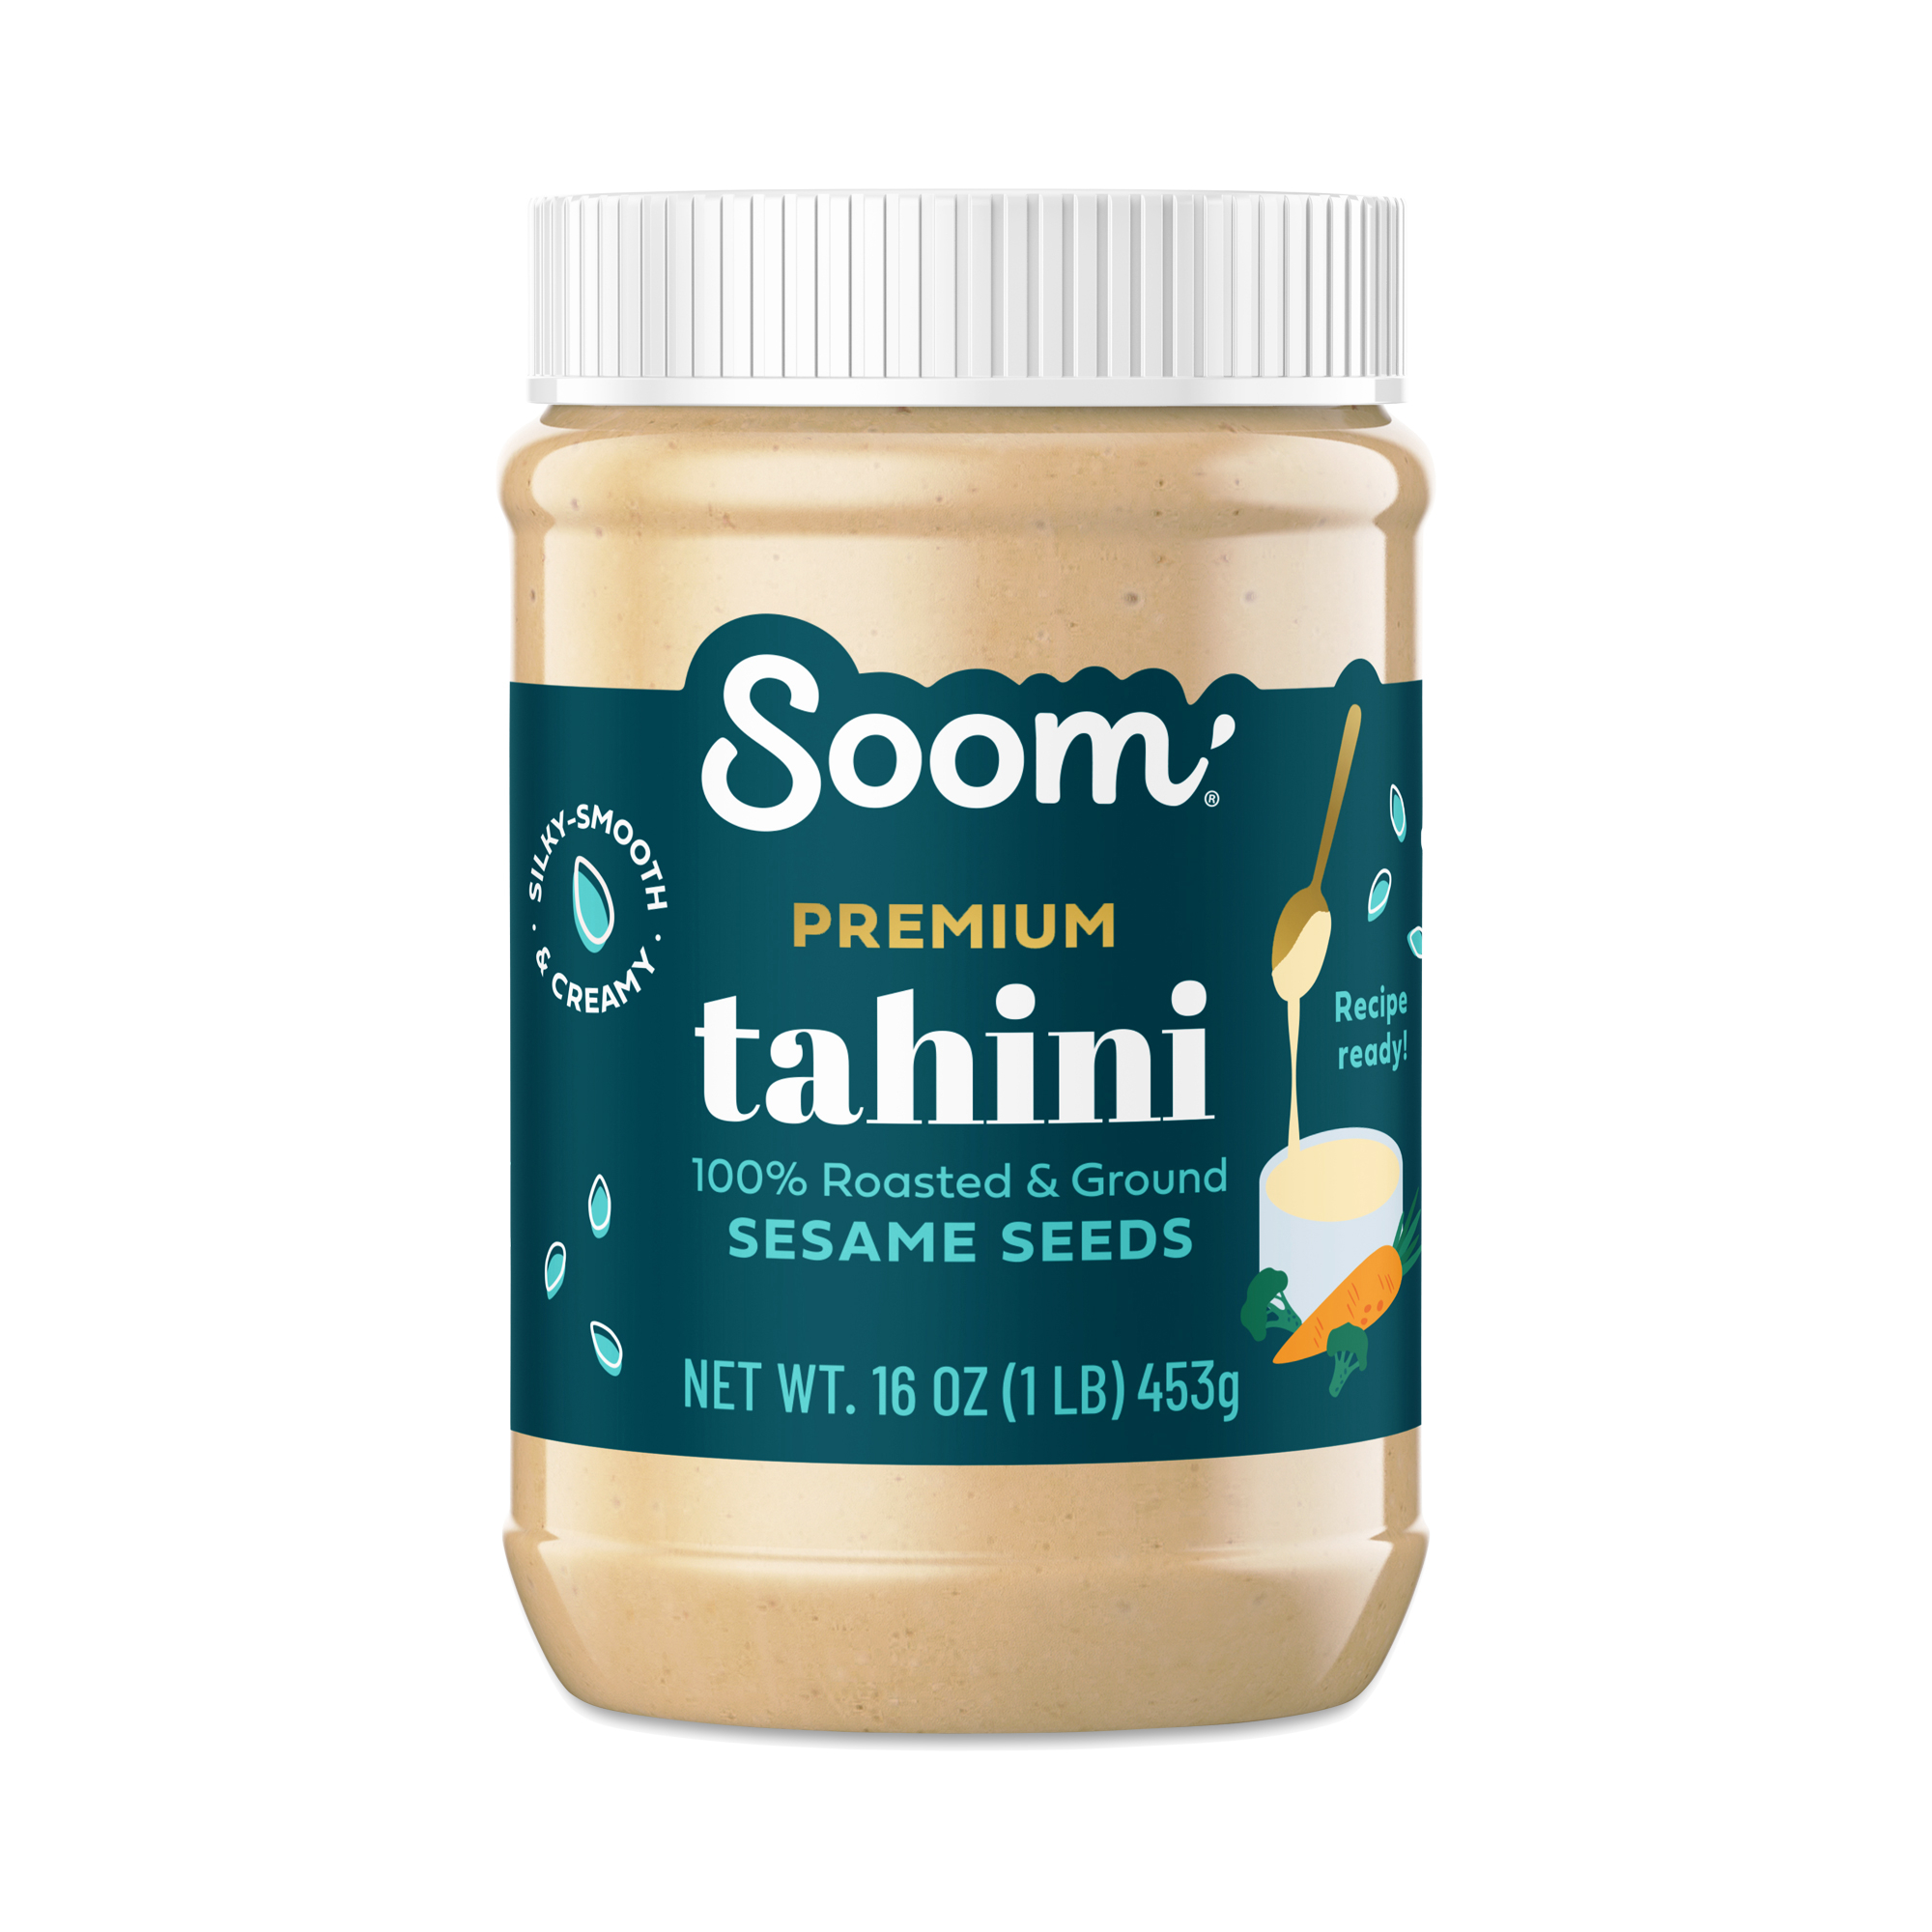 Soom Premium Tahini 16 oz jar